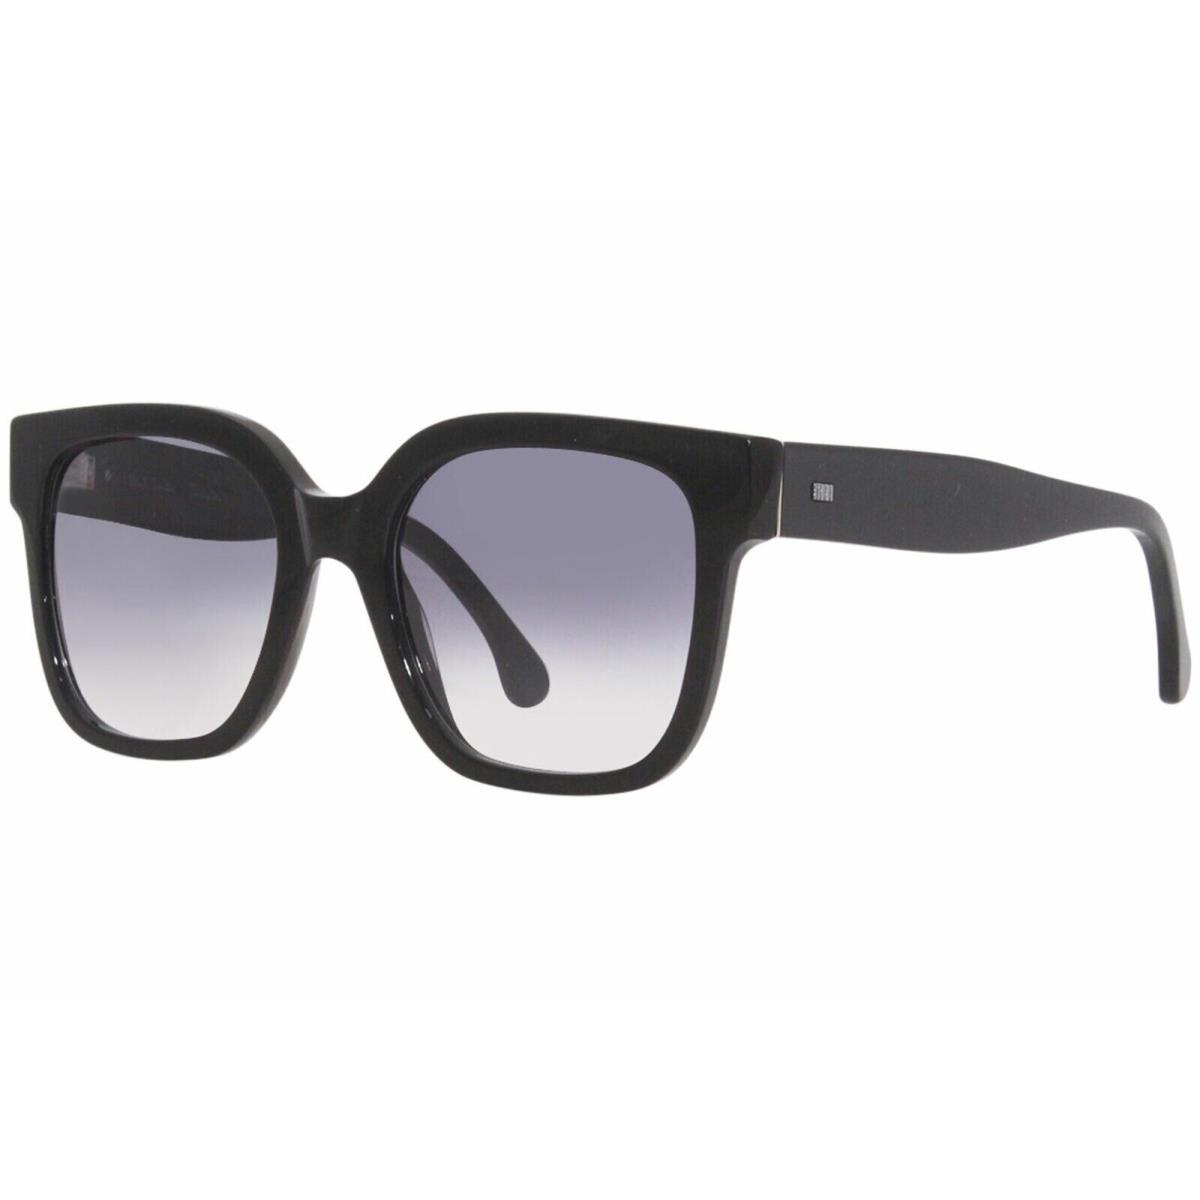 Paul Smith Sunglasses Delta PSSN046 Col. 01 54mm Black Frame